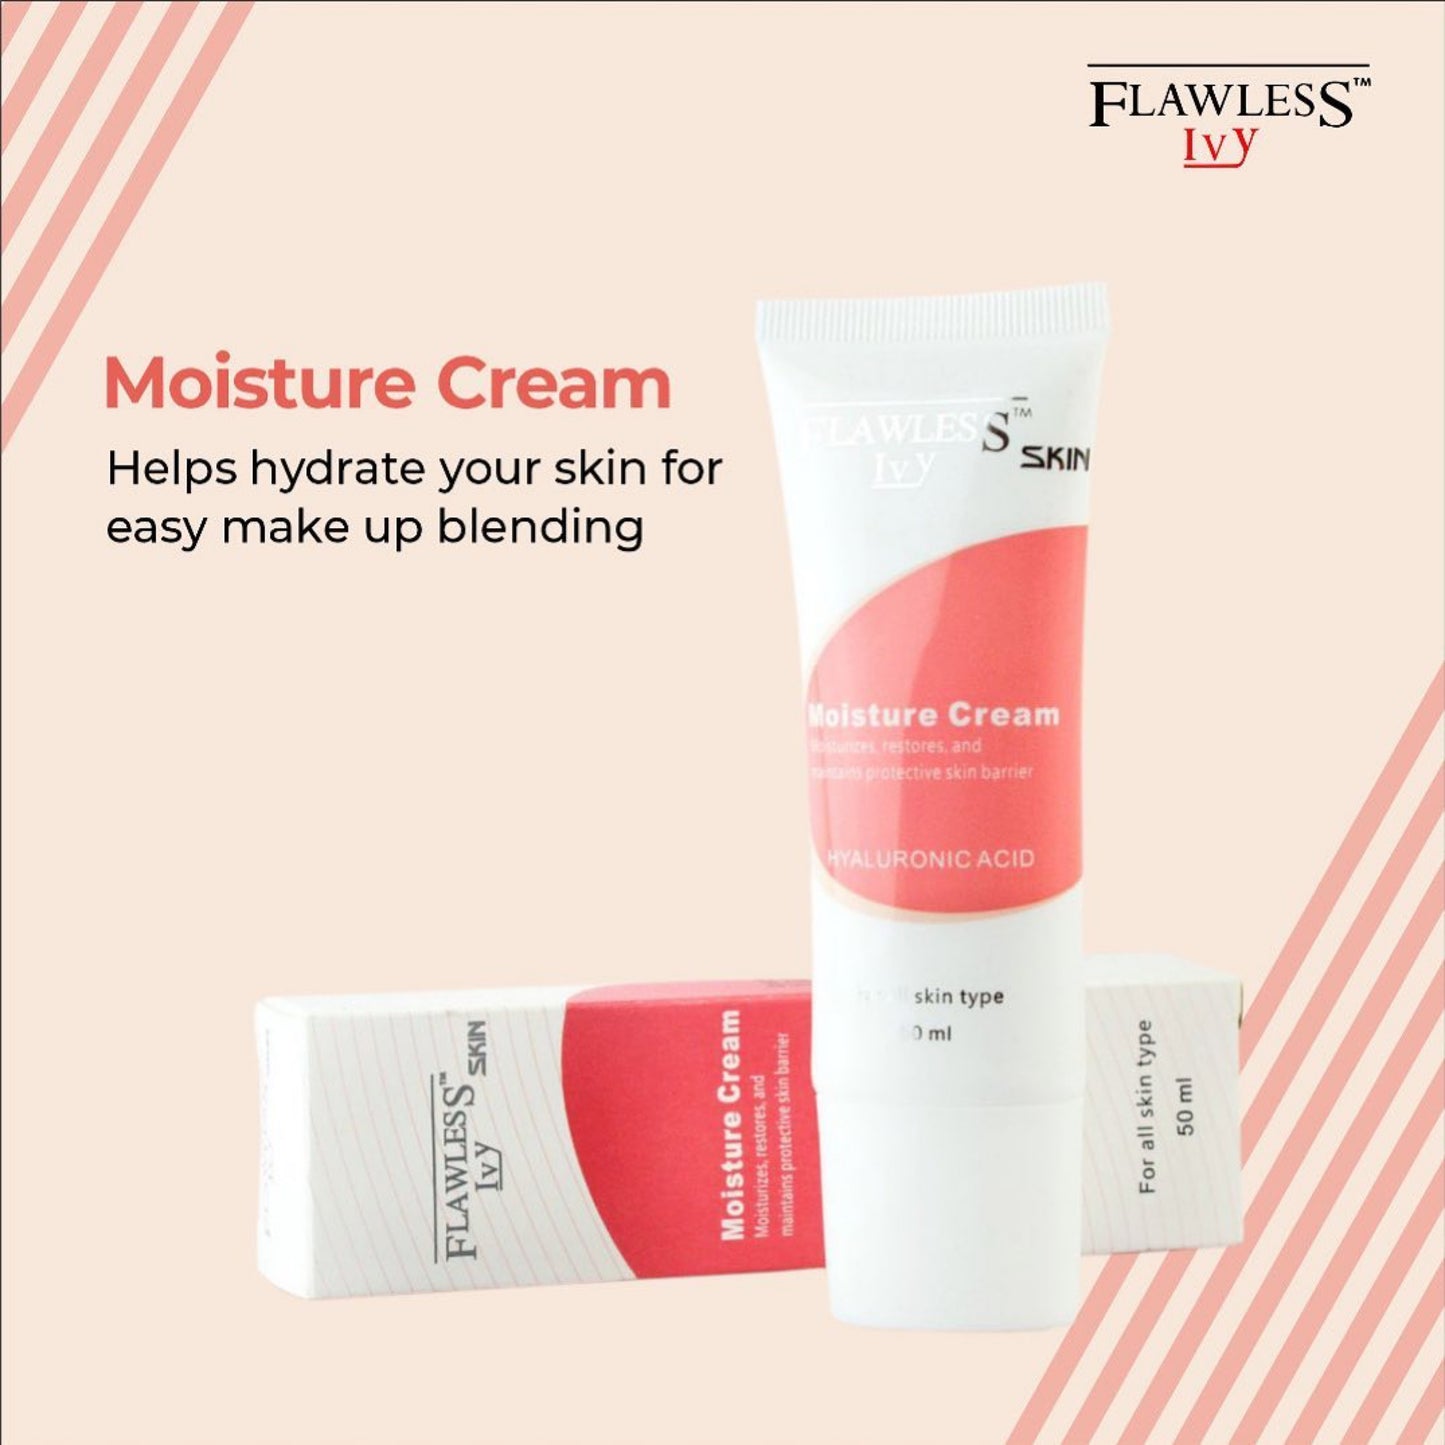 Flawless Ivy Moisture Cream